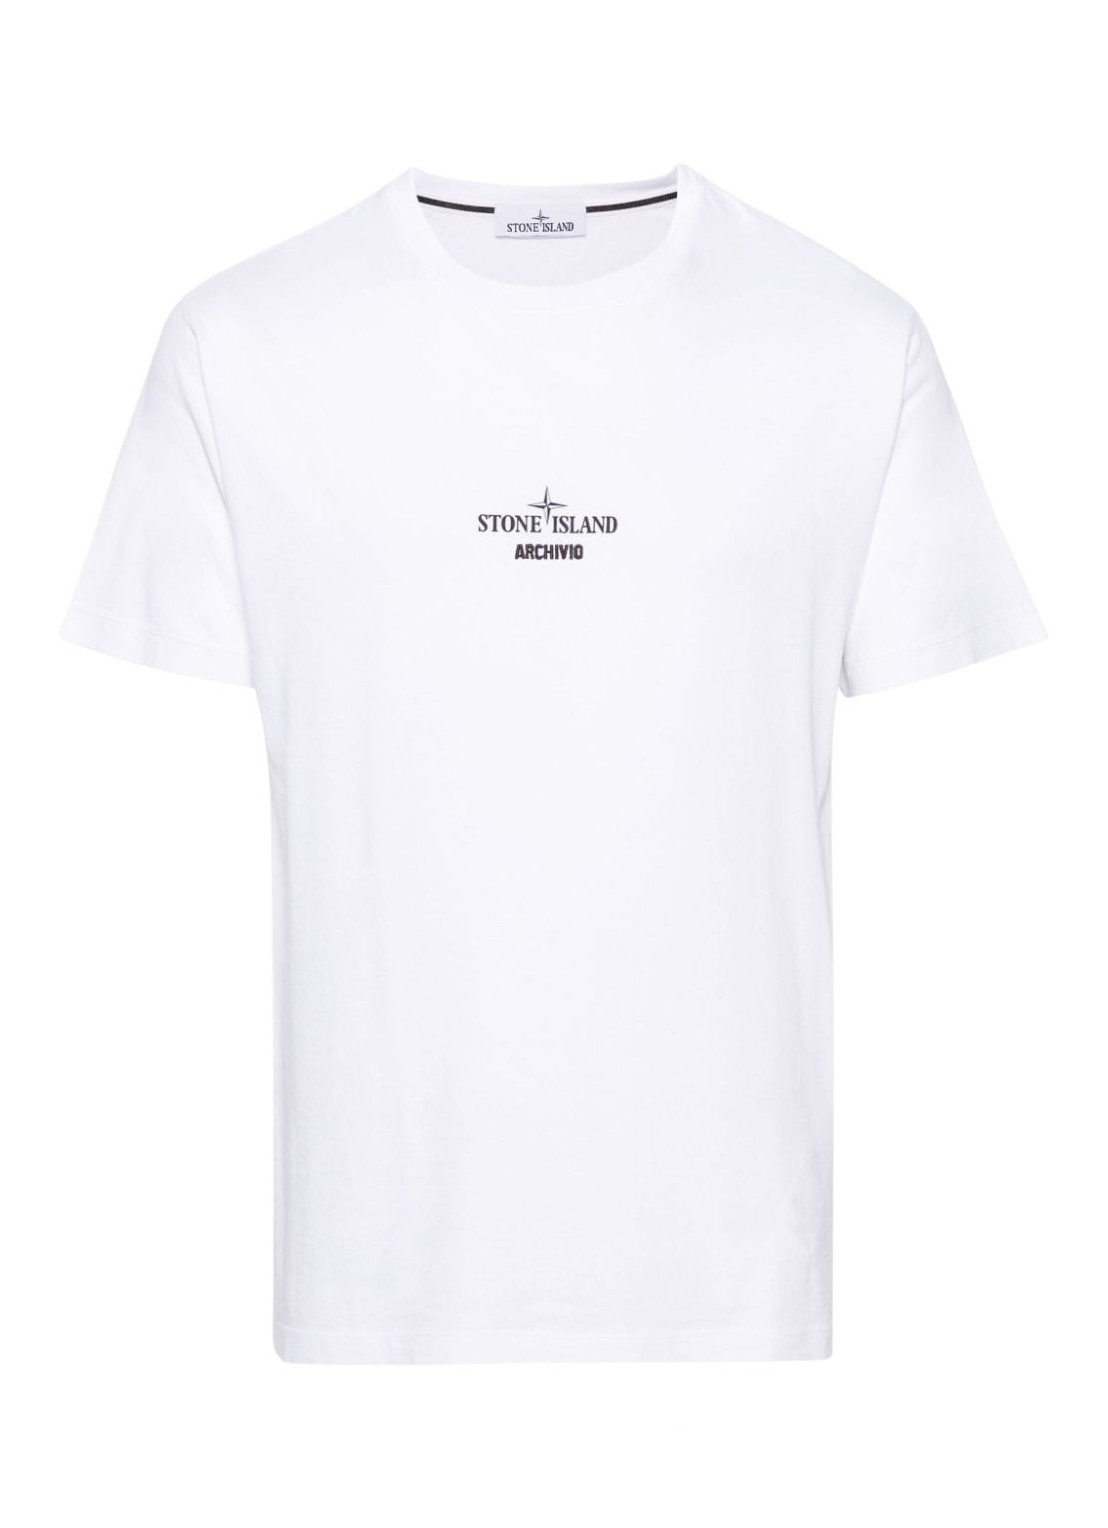 Camiseta stone island t-shirt man t shirt 80152ns91 v0001 talla L
 